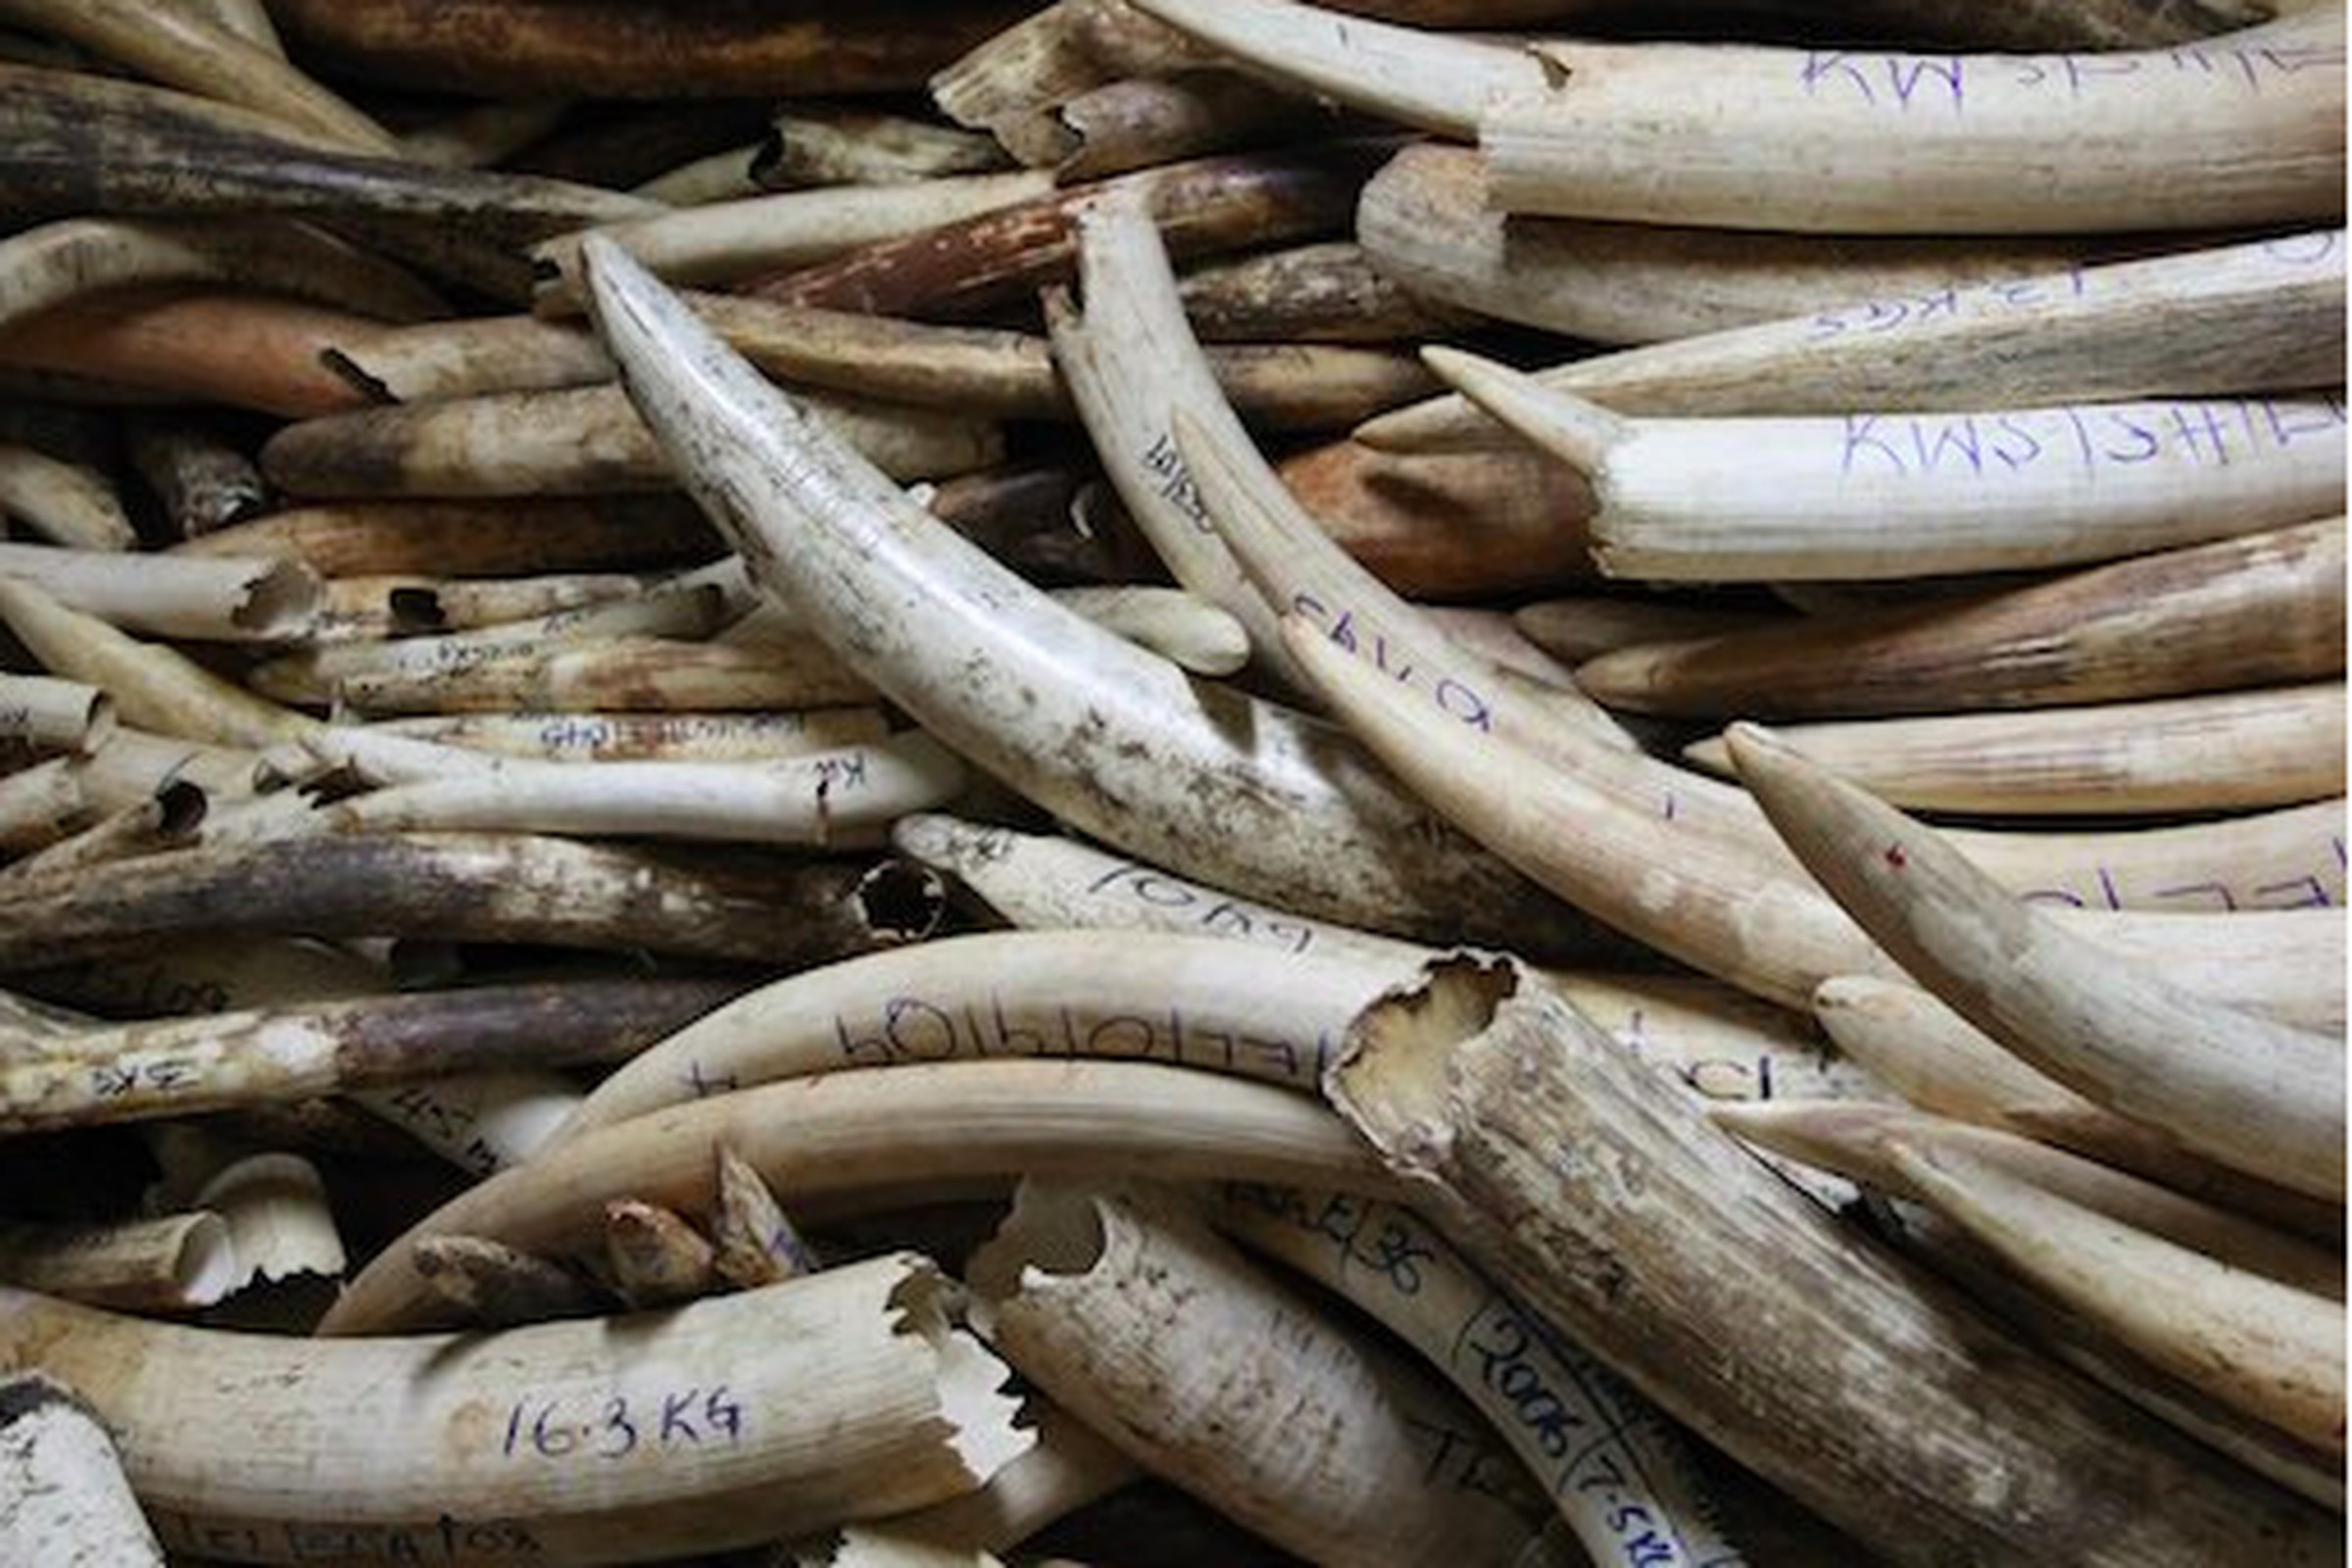 Seizure of illegal elephant tusks in Kenya